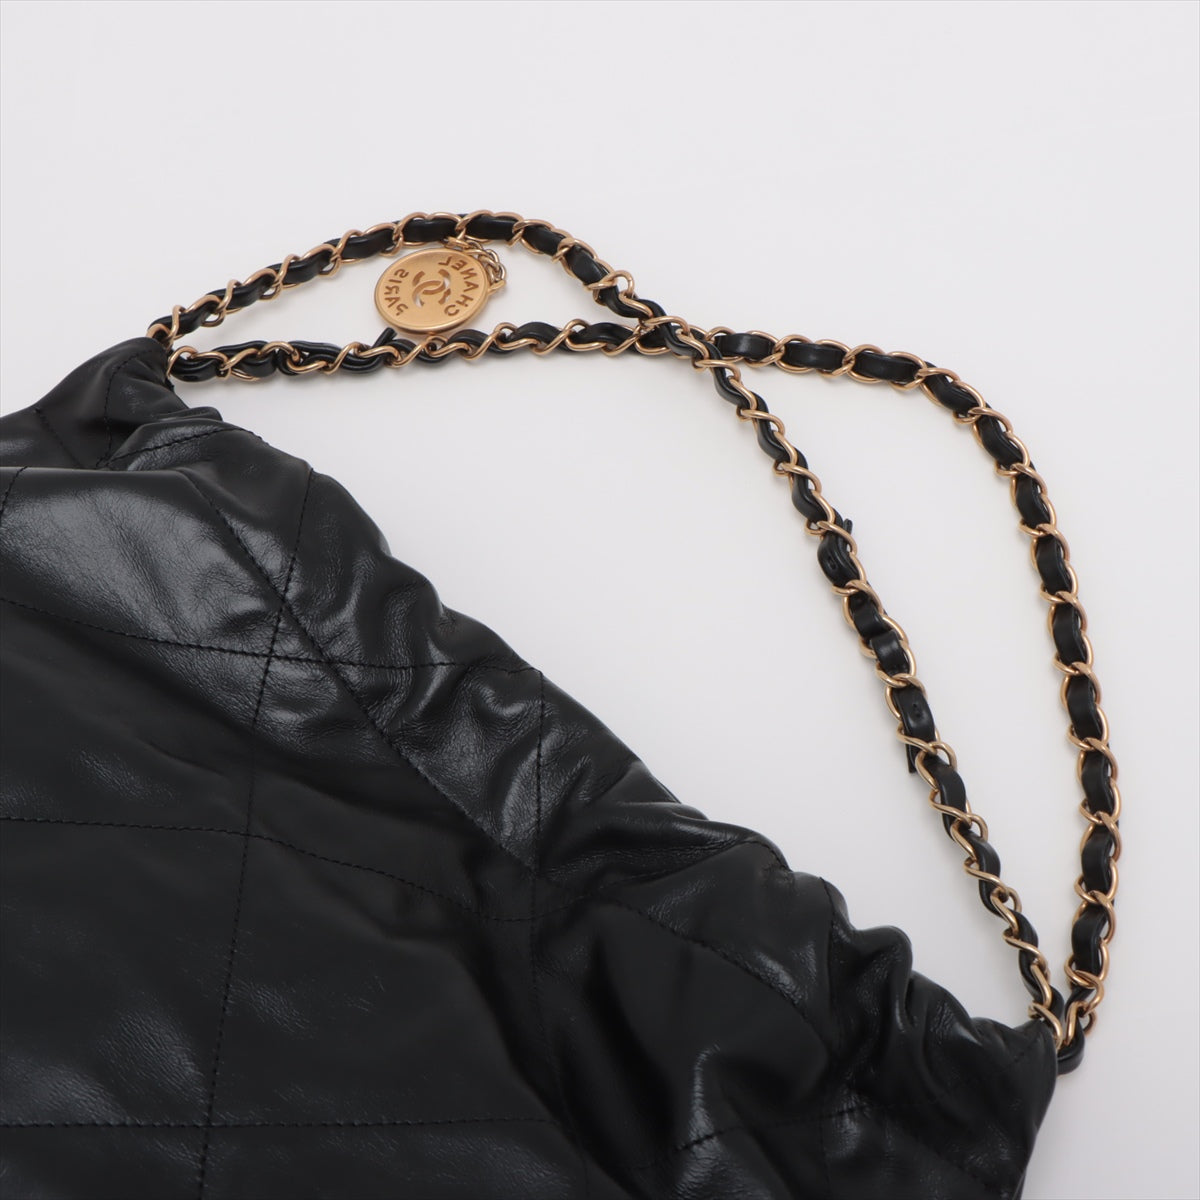 Chanel Chanel 22 Lambskin Chain Shoulder Bag Black Gold Metal Fittings AS3261